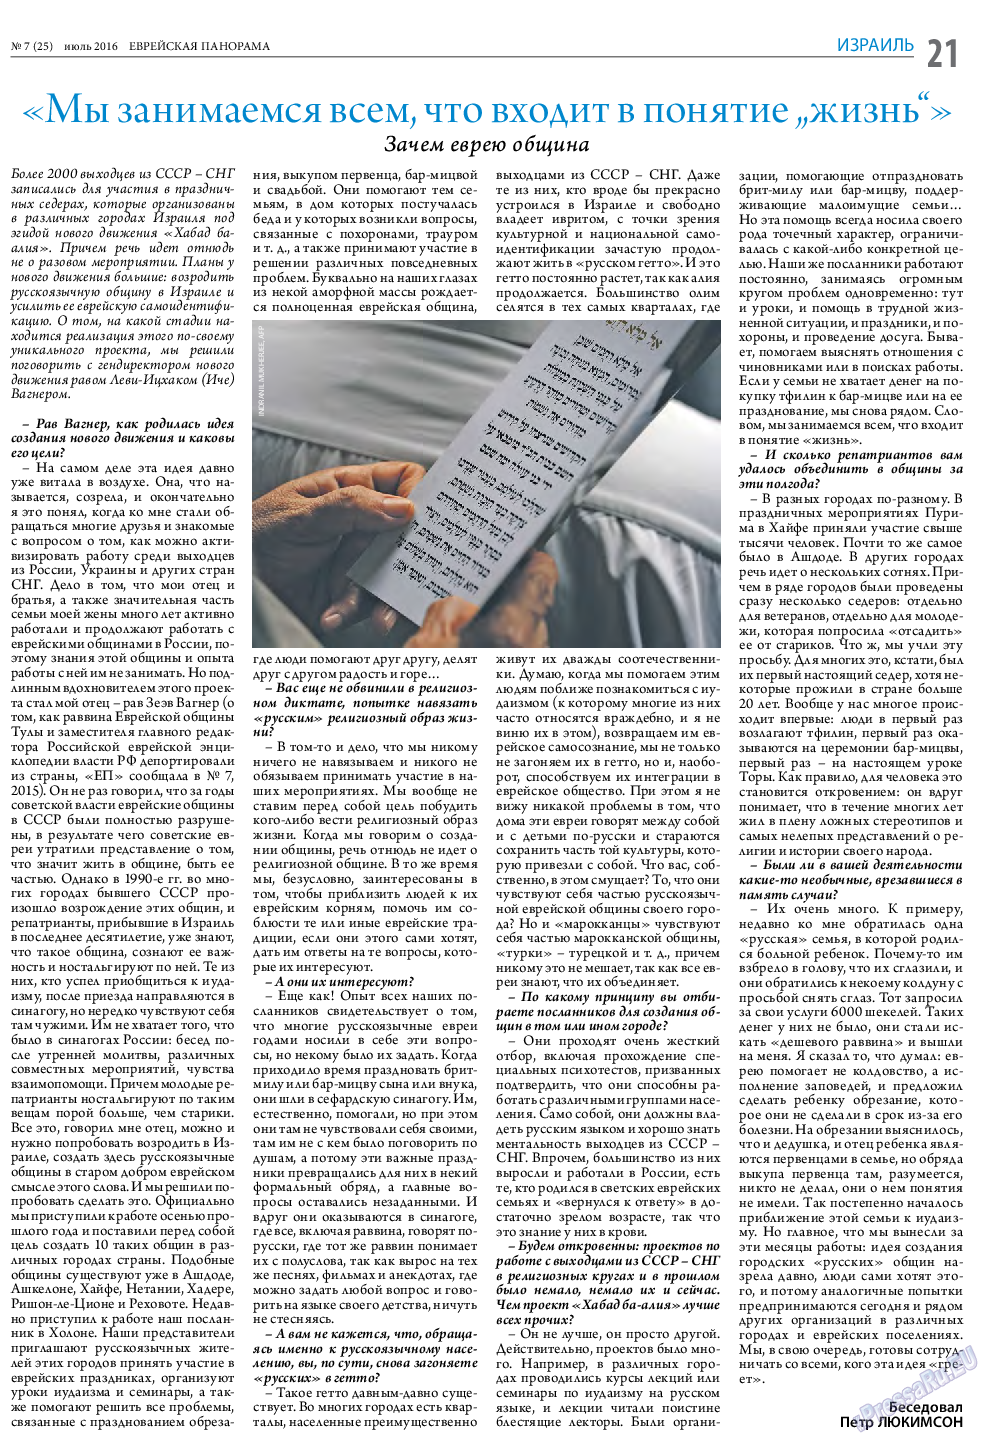 Еврейская панорама, газета. 2016 №7 стр.21